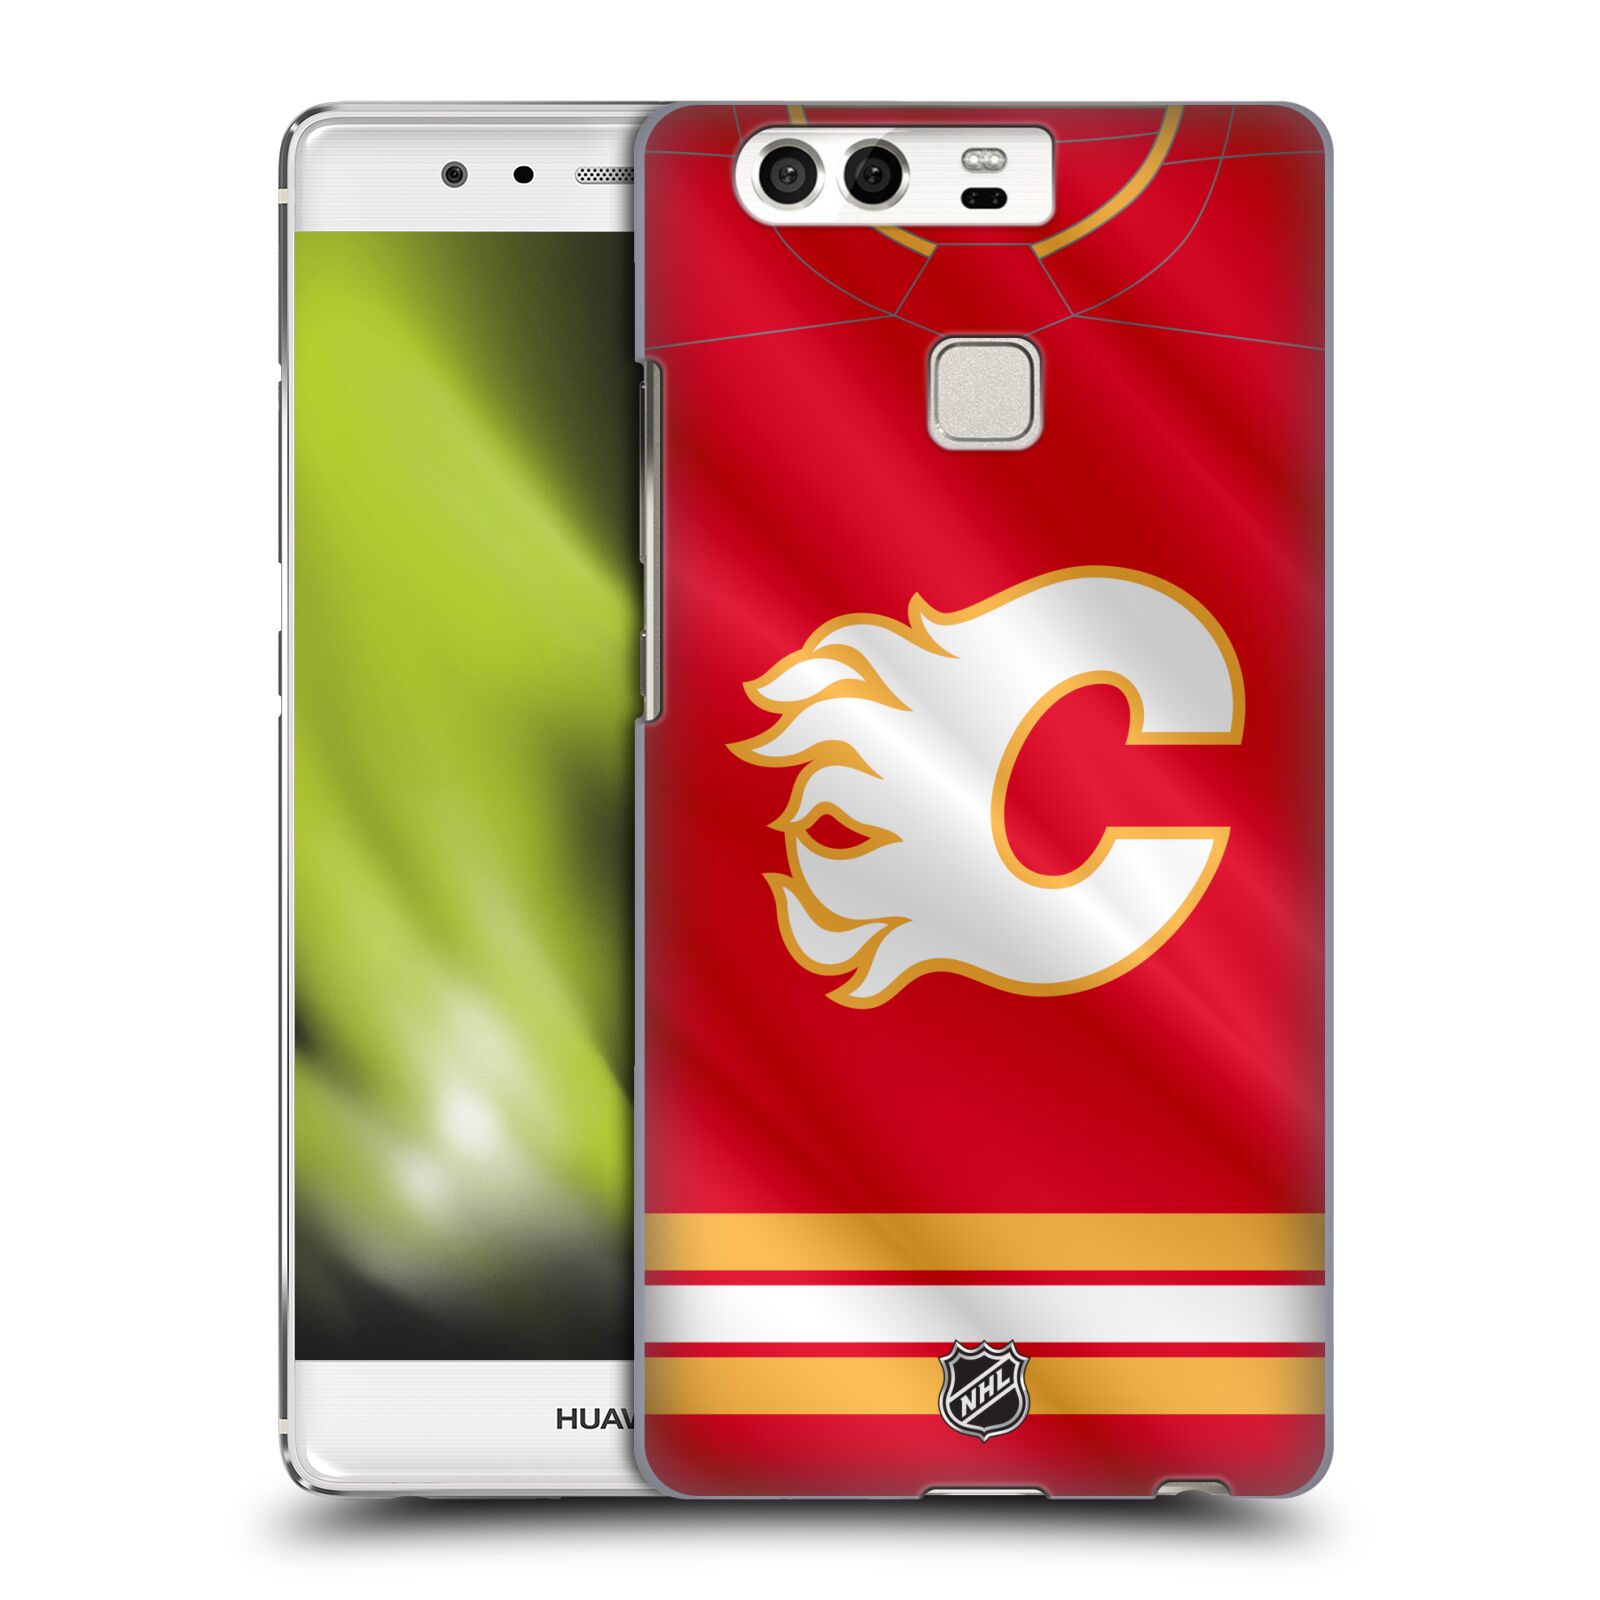 Pouzdro na mobil Huawei P9 / P9 DUAL SIM - HEAD CASE - Hokej NHL - Calgary Flames - Znak